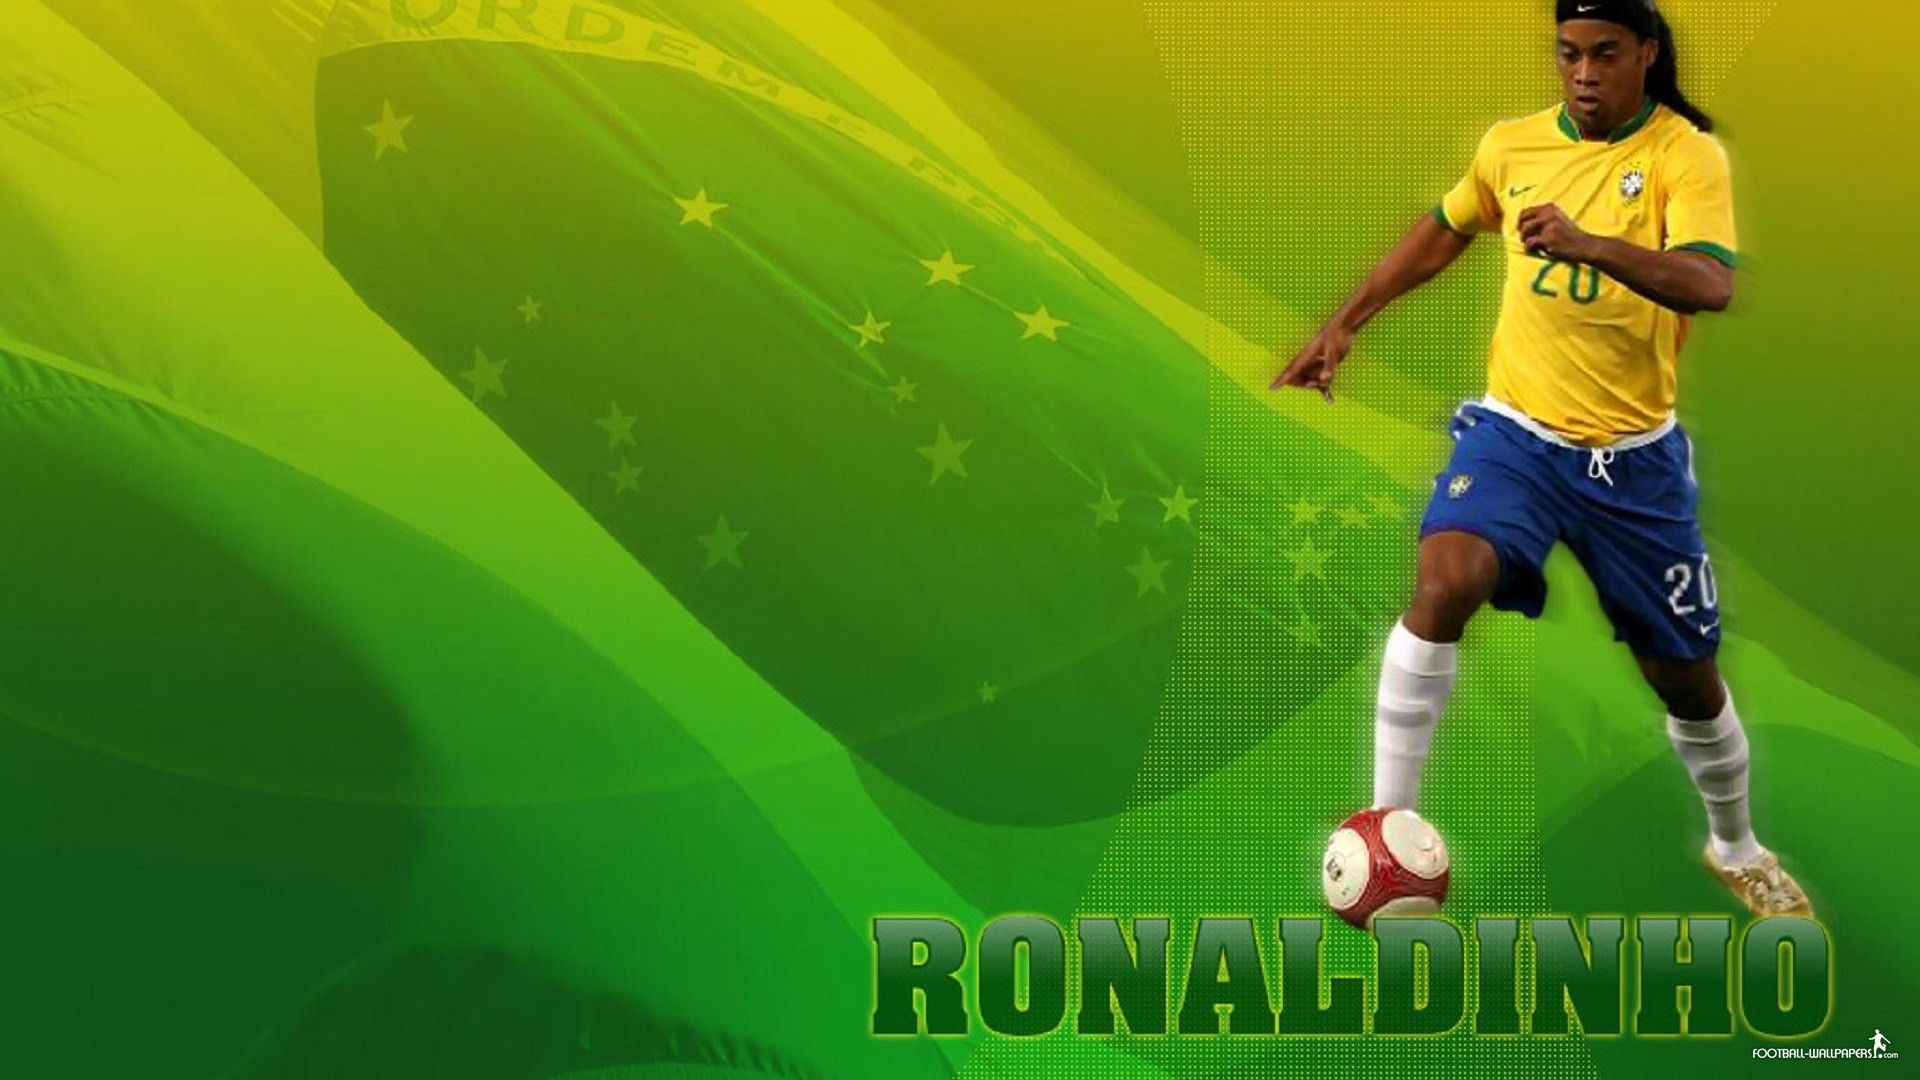 Brazil Ronaldinho Football Star Wallpaper